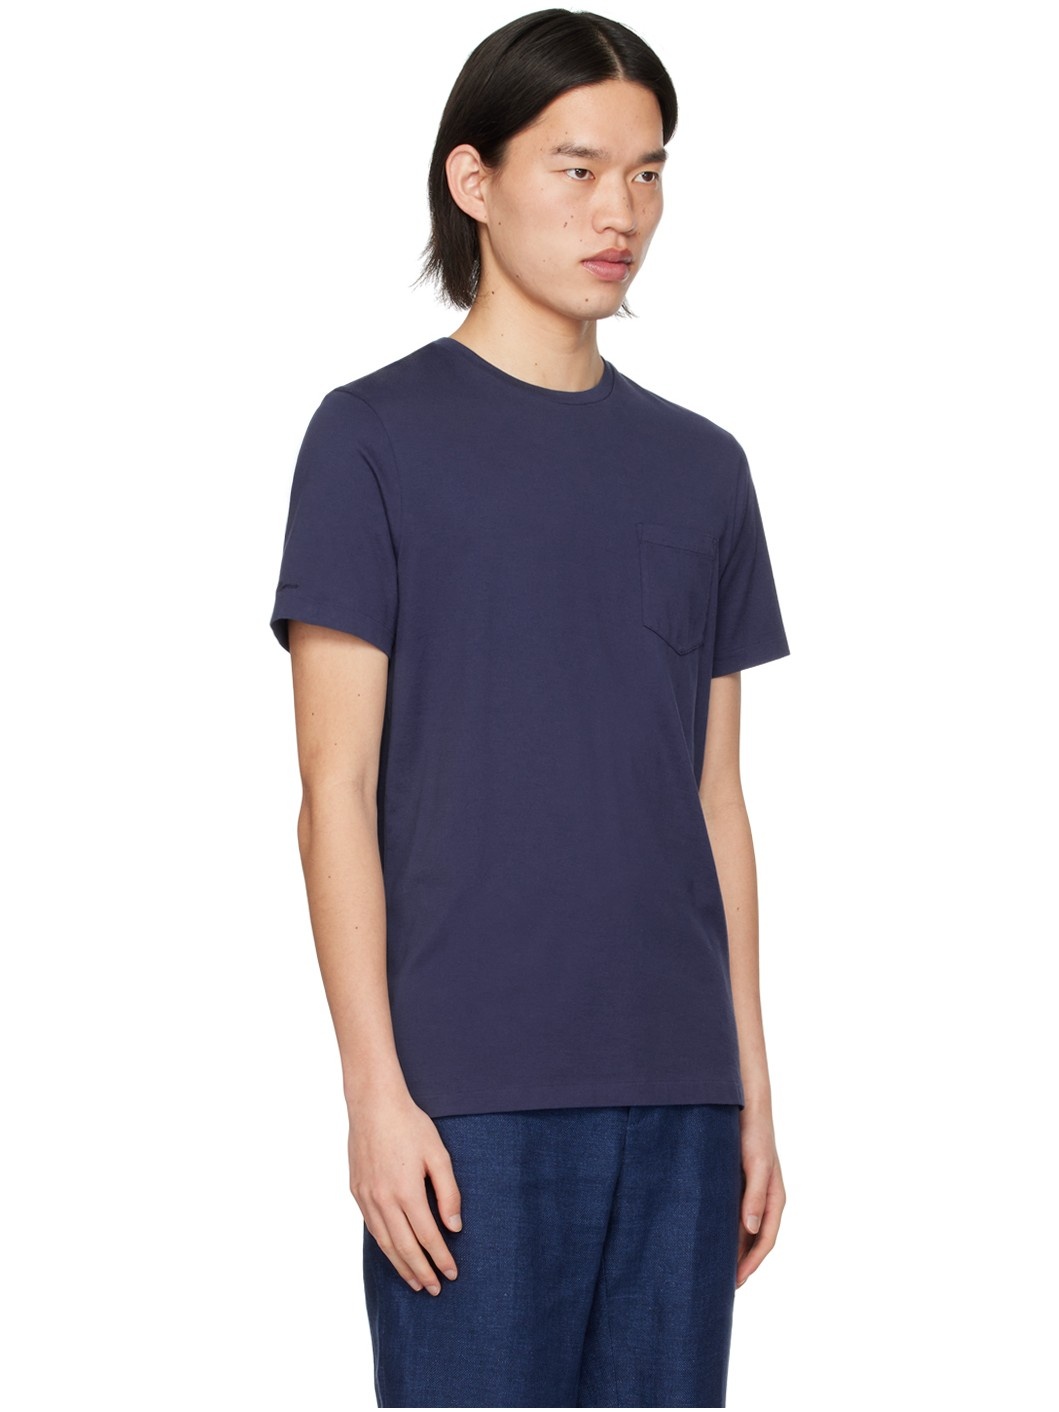 Blue Pocket T-Shirt - 2